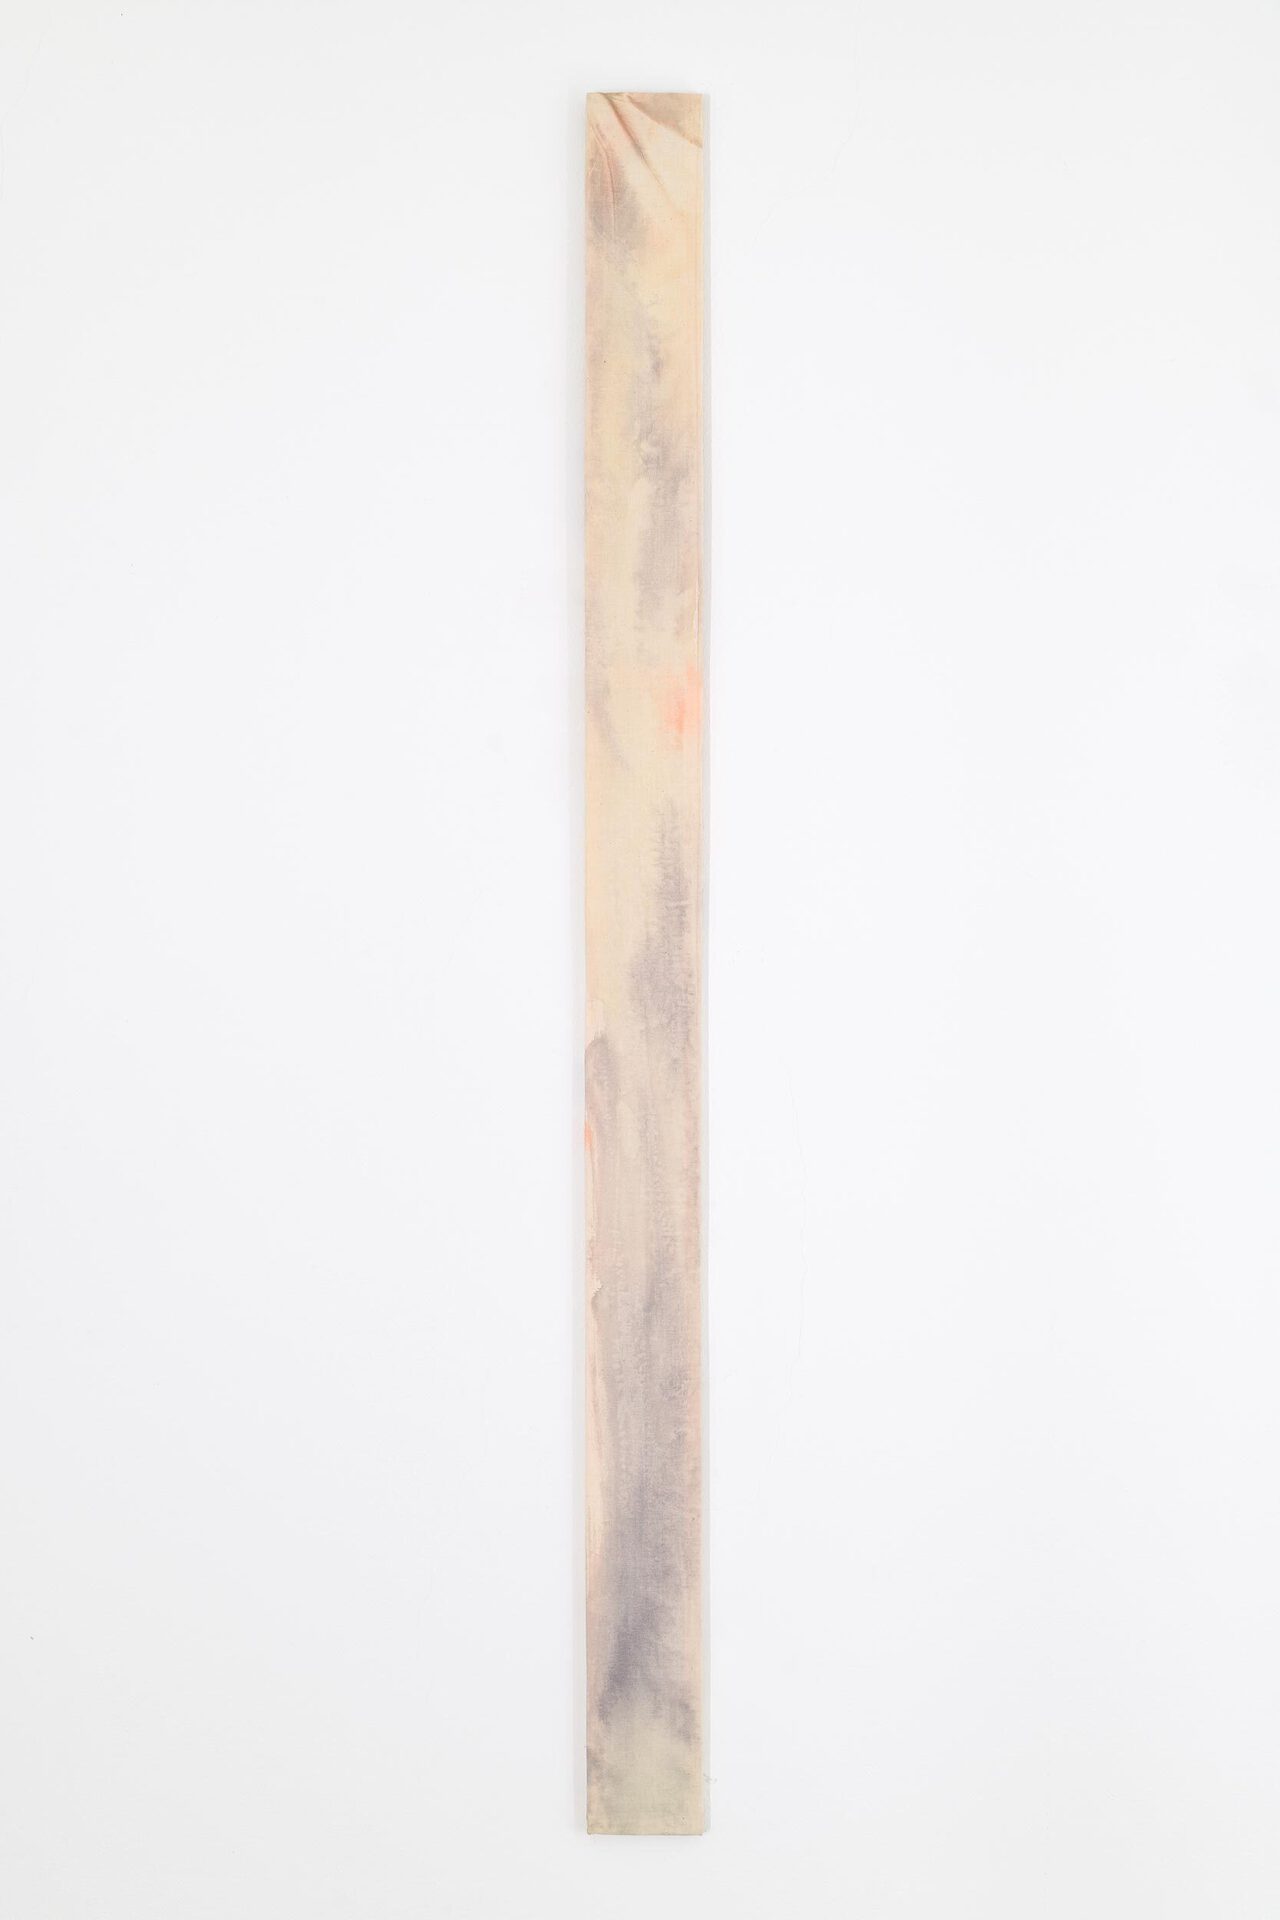 Axel Koschier, 5, 2021, watercolour, cotton, wood, 150 × 10 cm